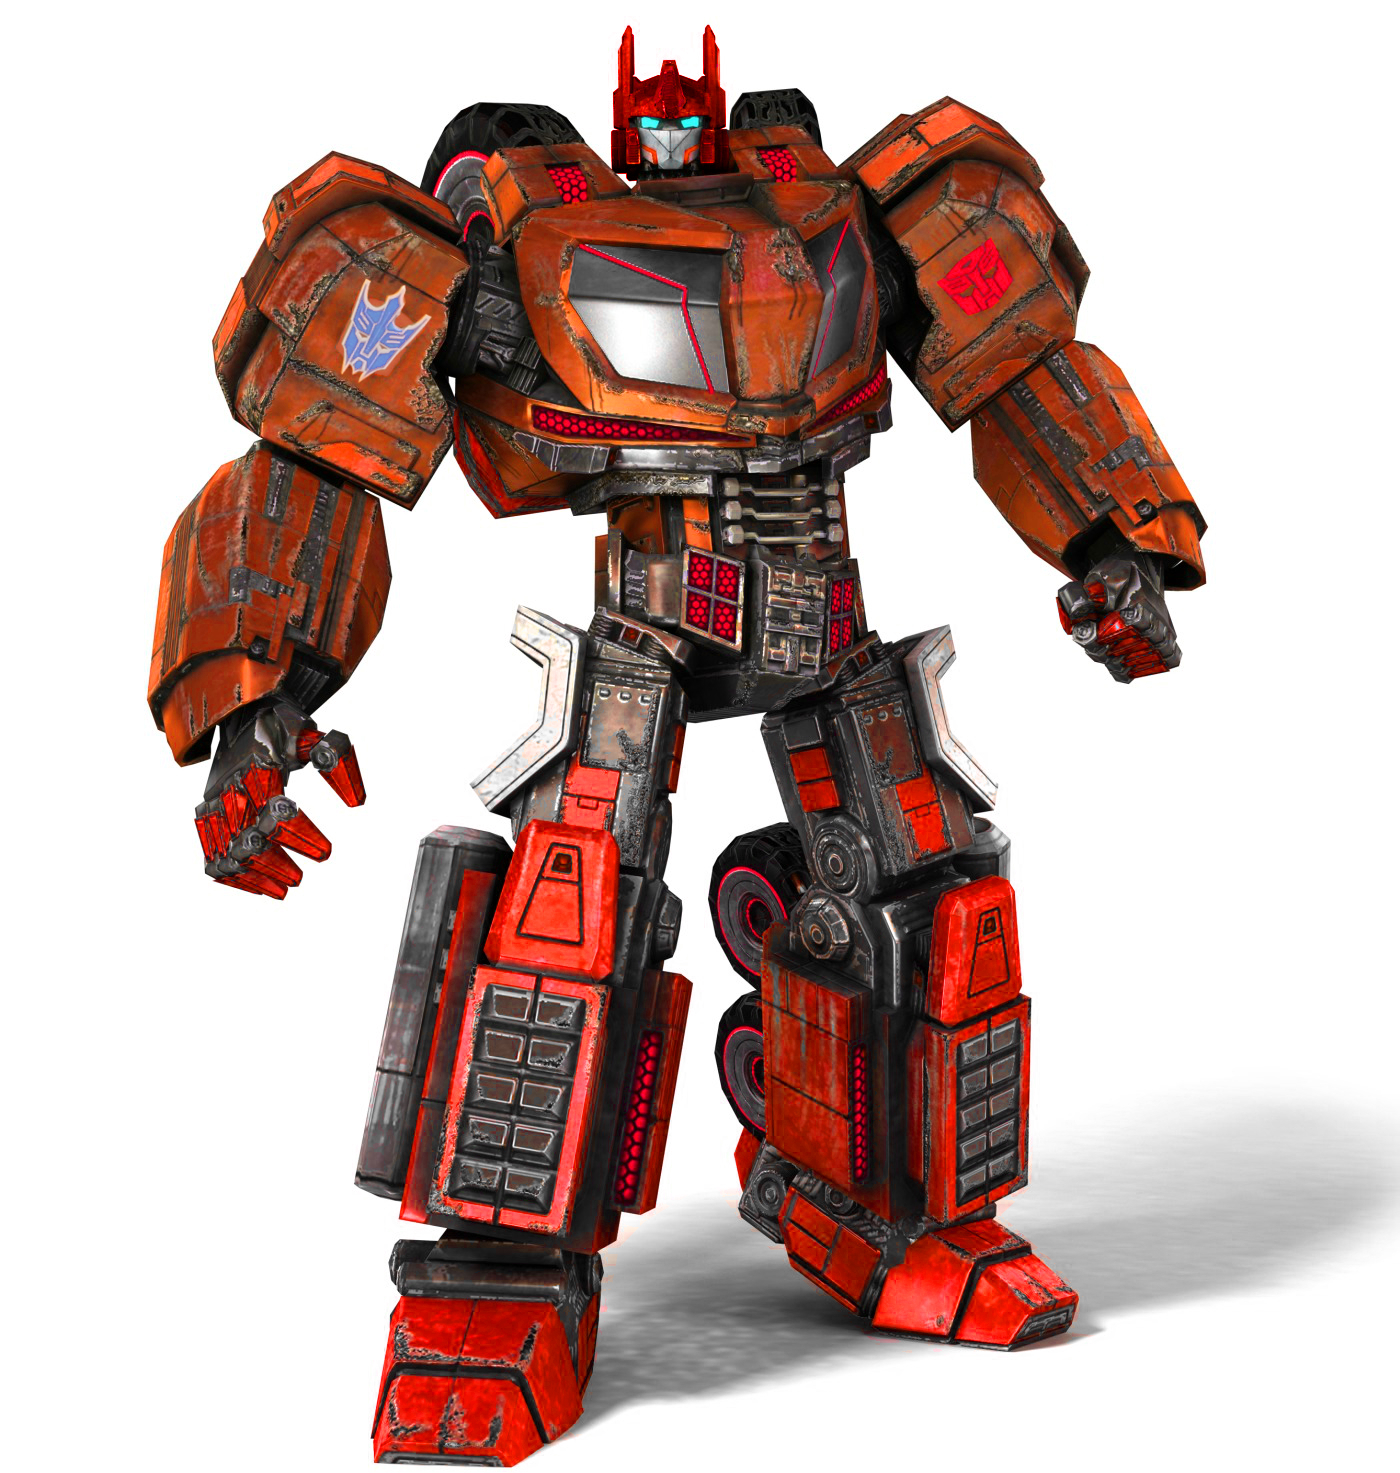 Red transformer. Оптимус g1 Transformers Fall of Cybertron. Трансформеры Кибертрон игрушки Оптимус Прайм. Оптимус Прайм на Кибертроне. Трансформеры битва за Кибертрон Оптимус Прайм.